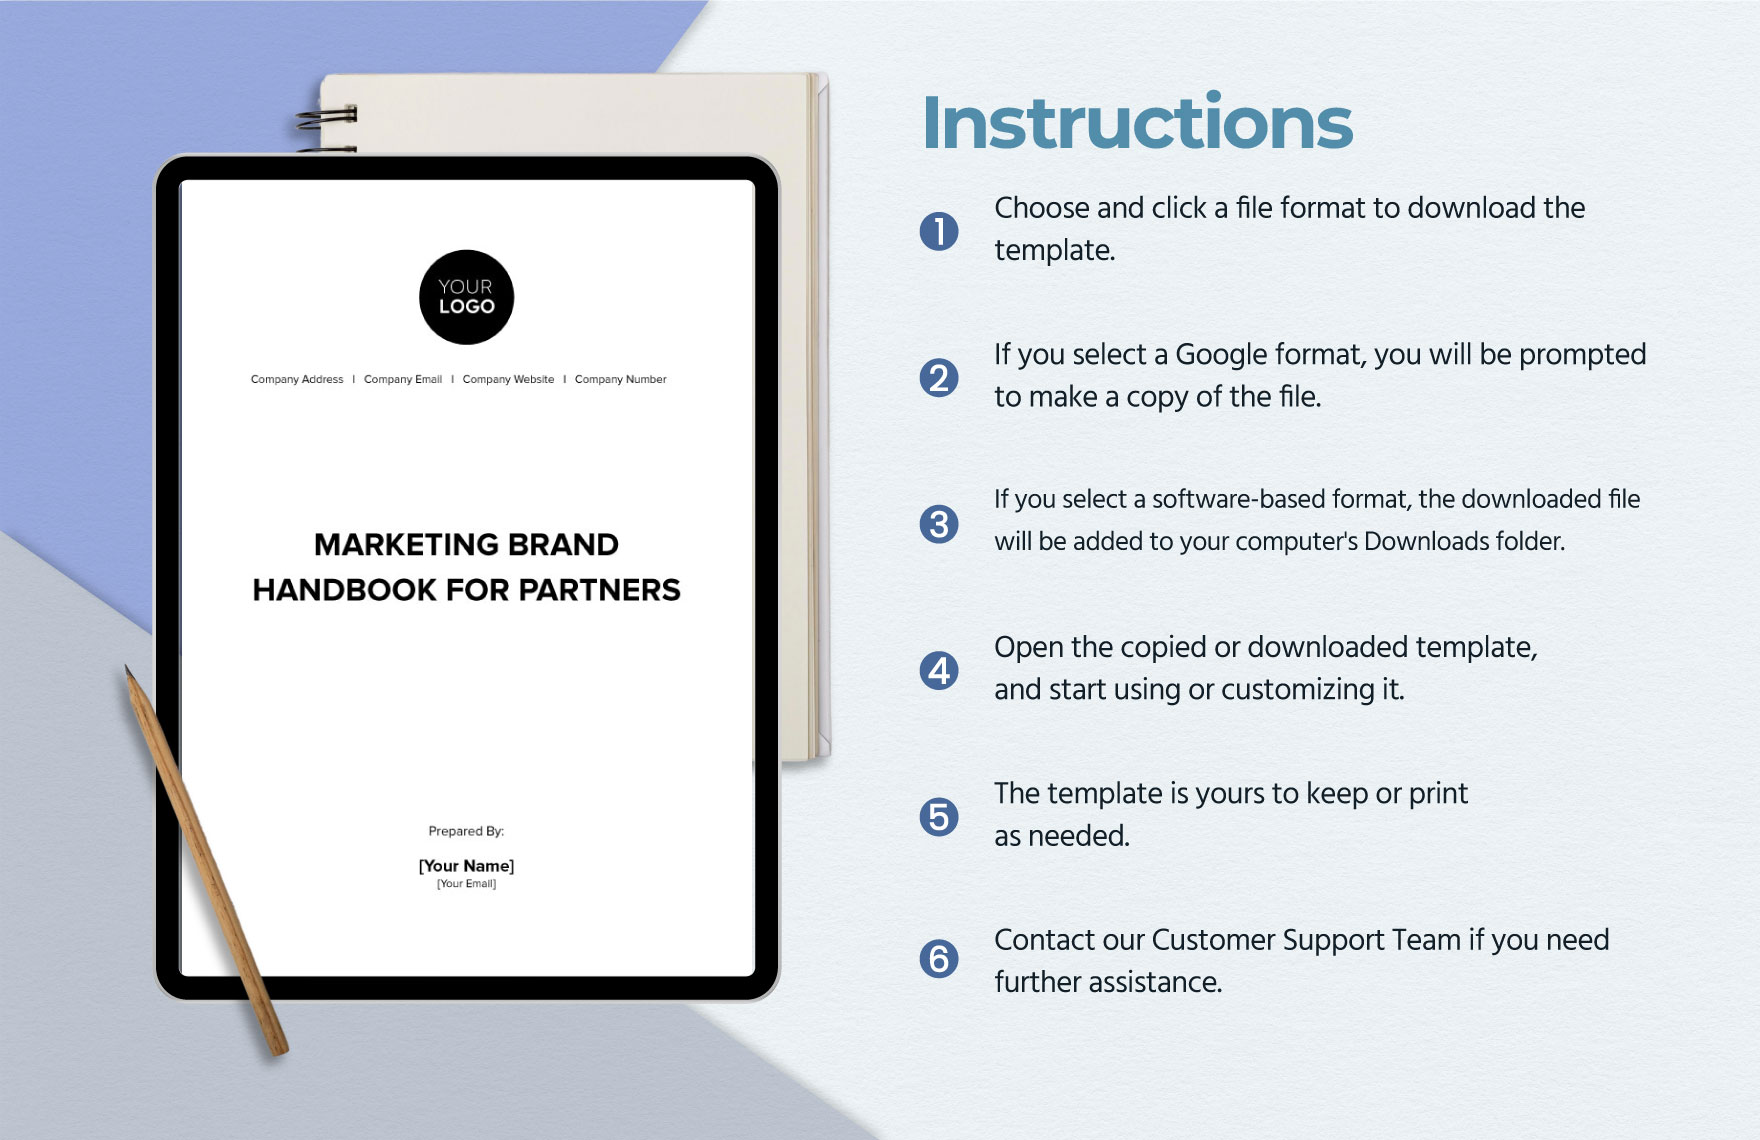 Marketing Brand Handbook for Partners Template